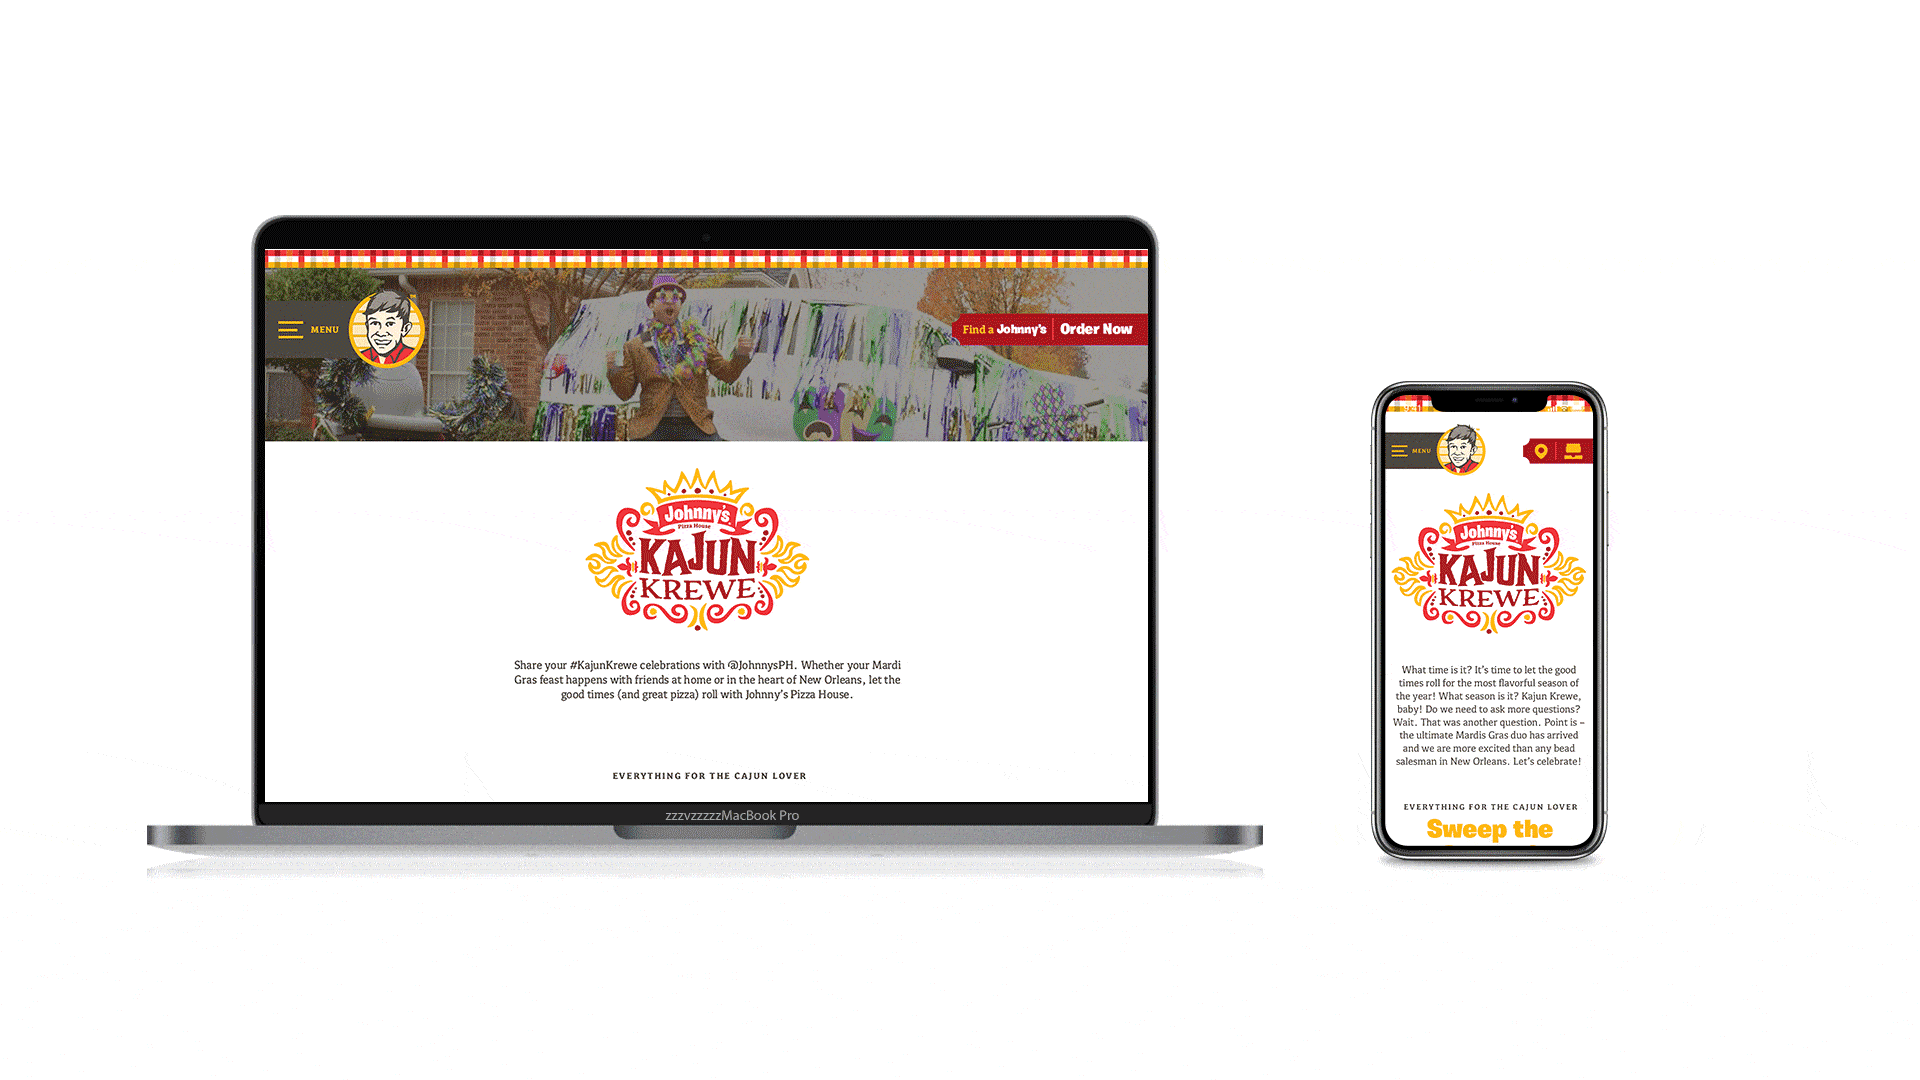 Johnny's Pizza House Kajun Krewe limited time offer marketing campaign creative landing page digital design